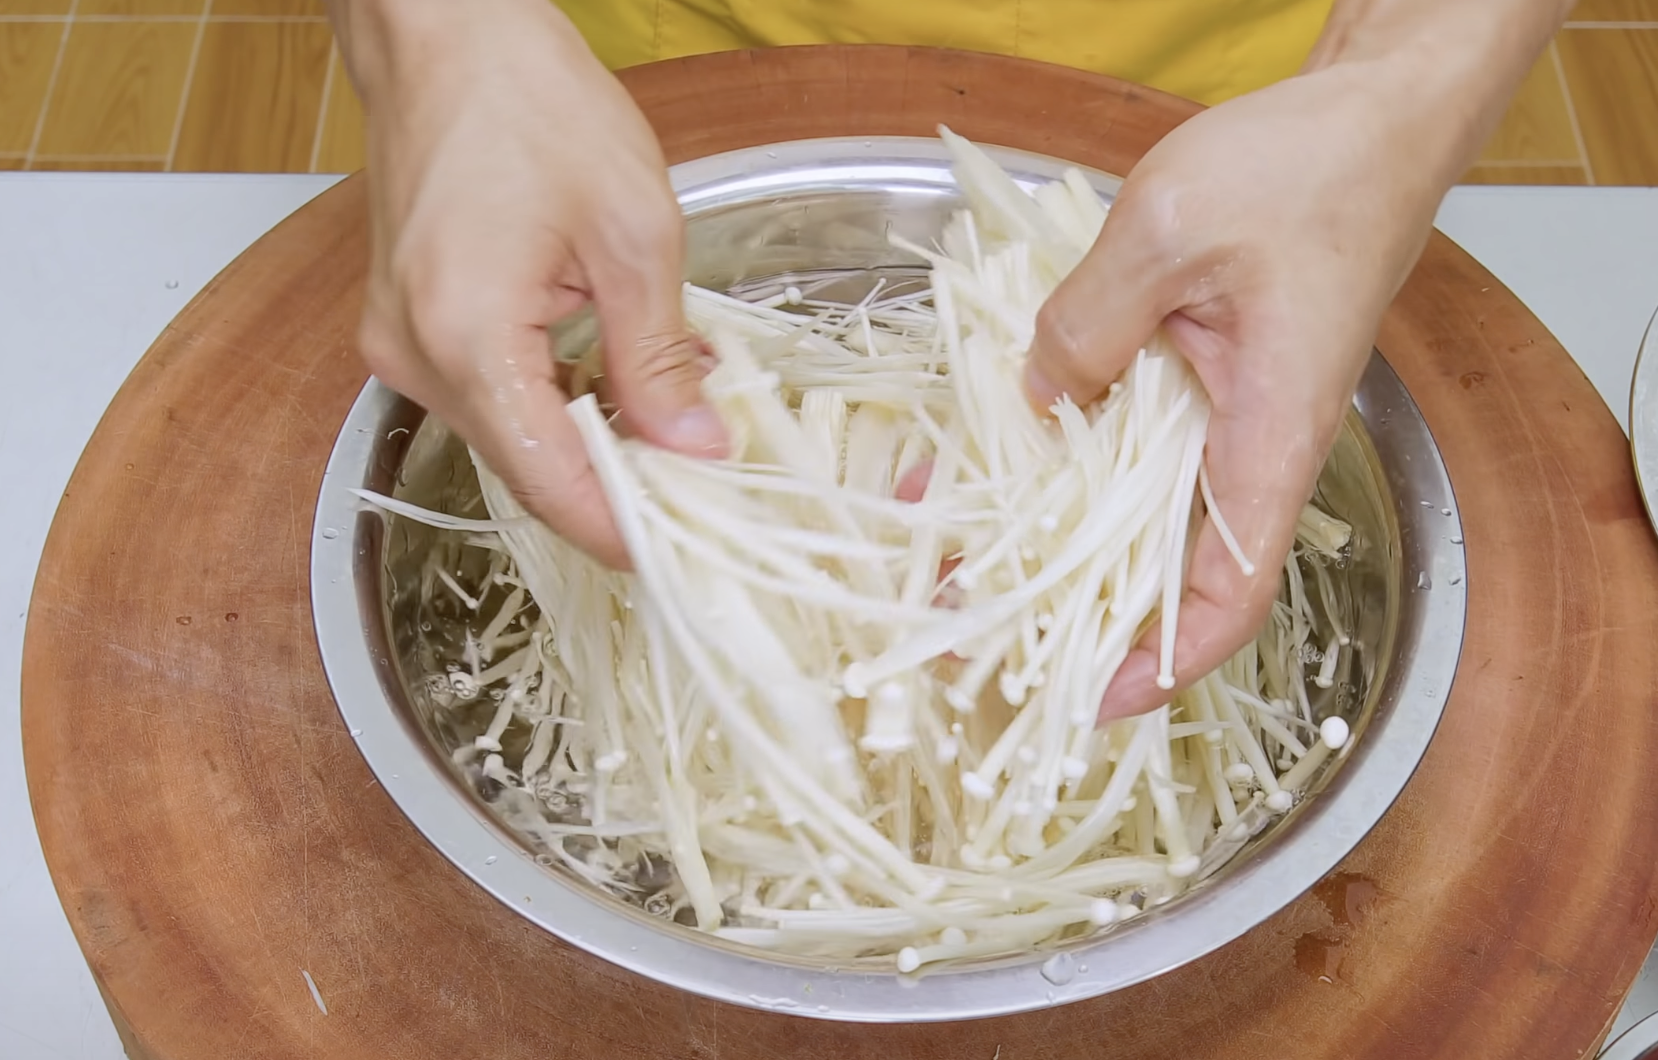 Image of Remova a raiz de Enokitake cogumelos, lave-a e rasgue-a uniformemente